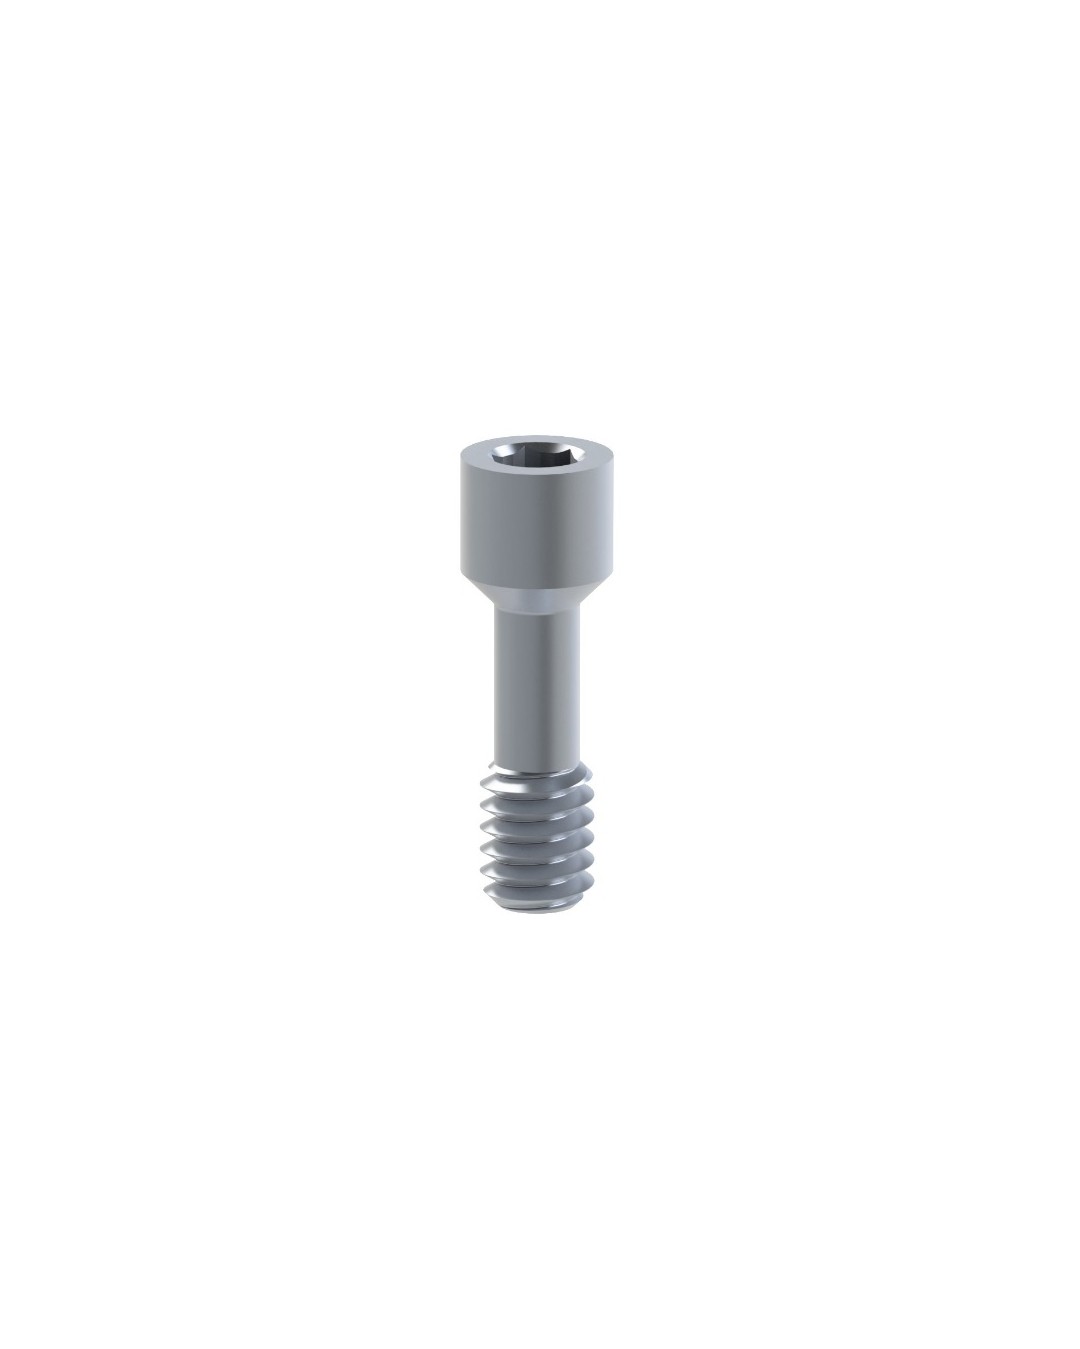 Titanium Screw compatible with BioHorizons® Tapered Internal®